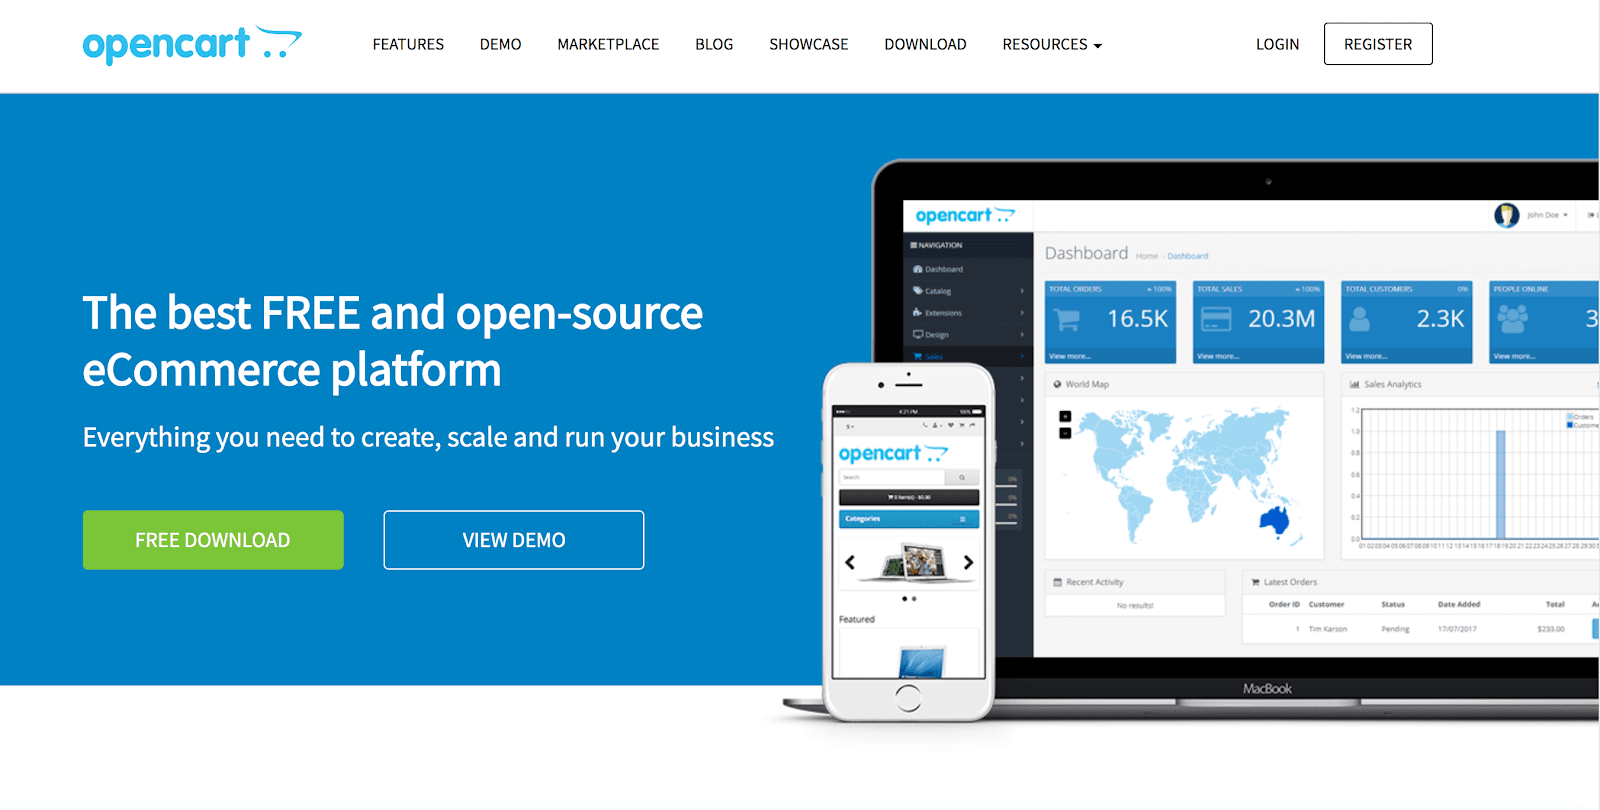 OpenCart Homepage